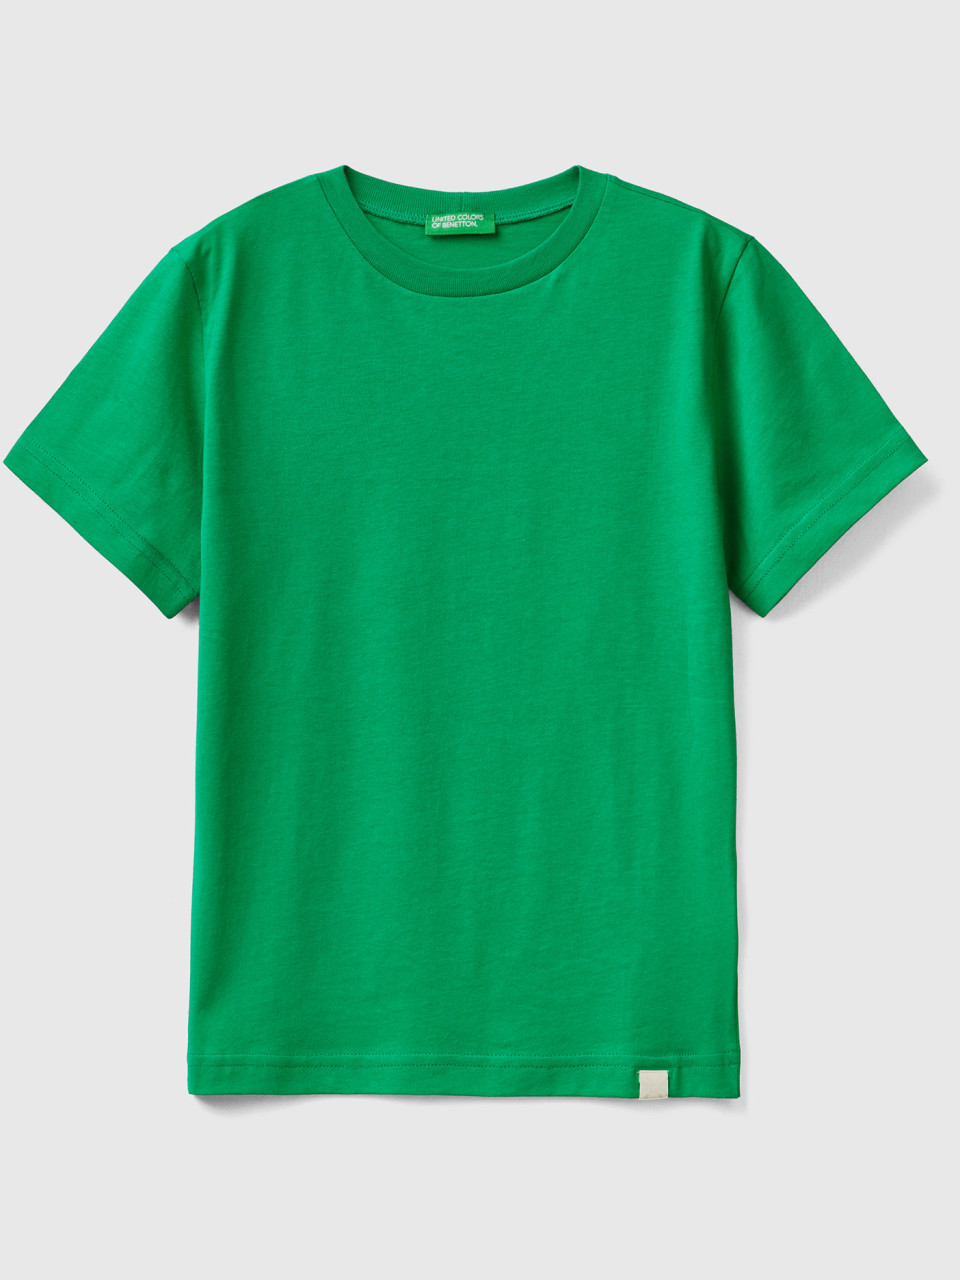 Benetton, Camiseta De Algodón Orgánico, Verde, Niños